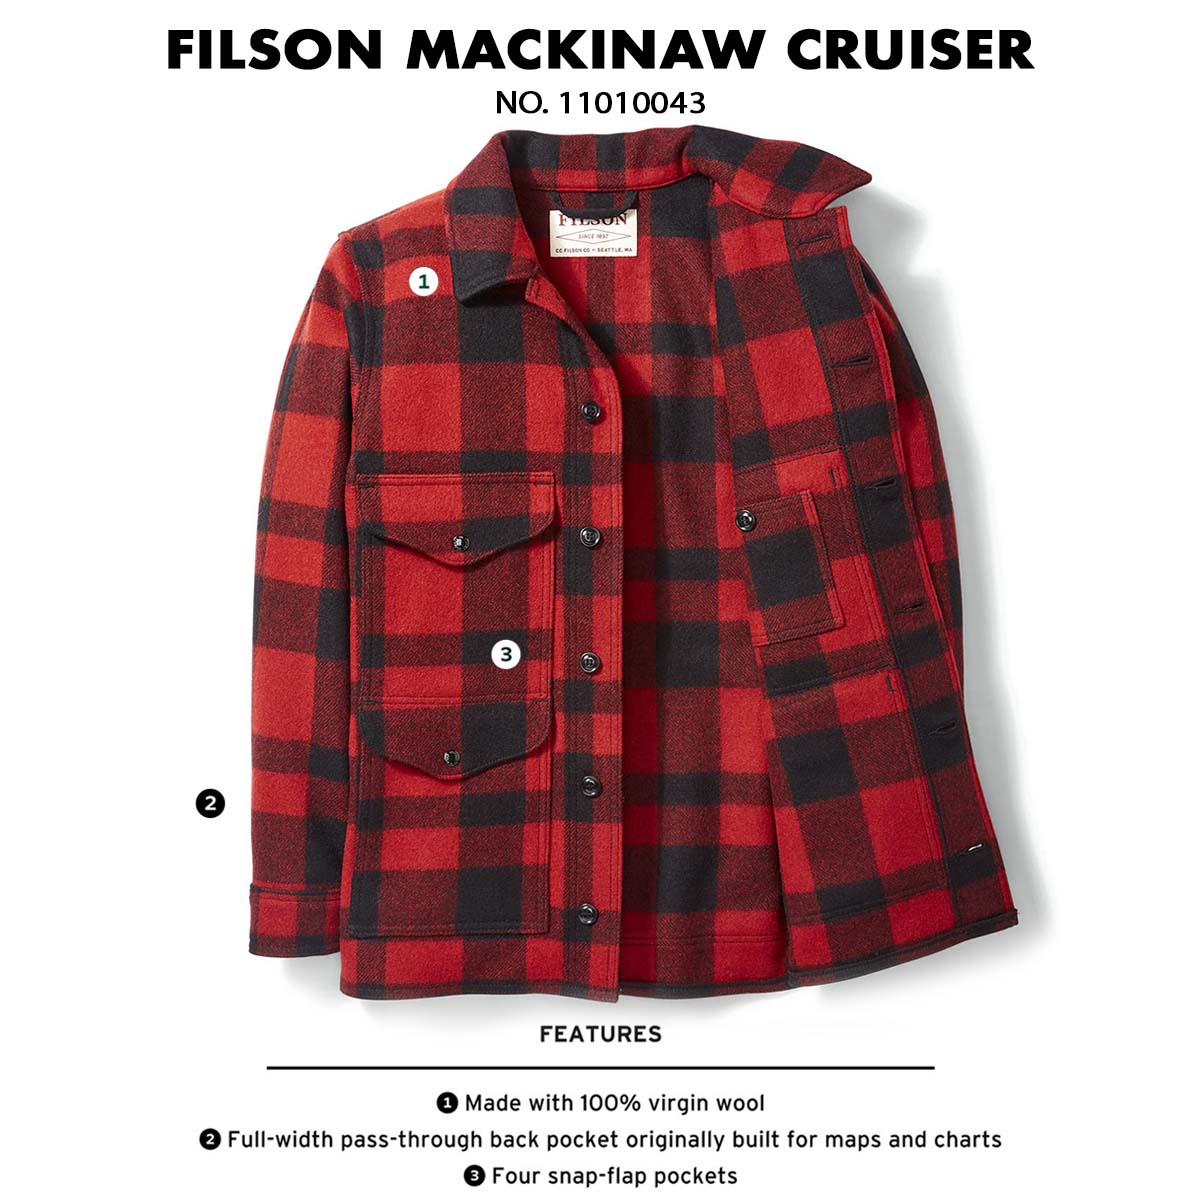 Filson Mackinaw Cruiser Red Black 11010043, features